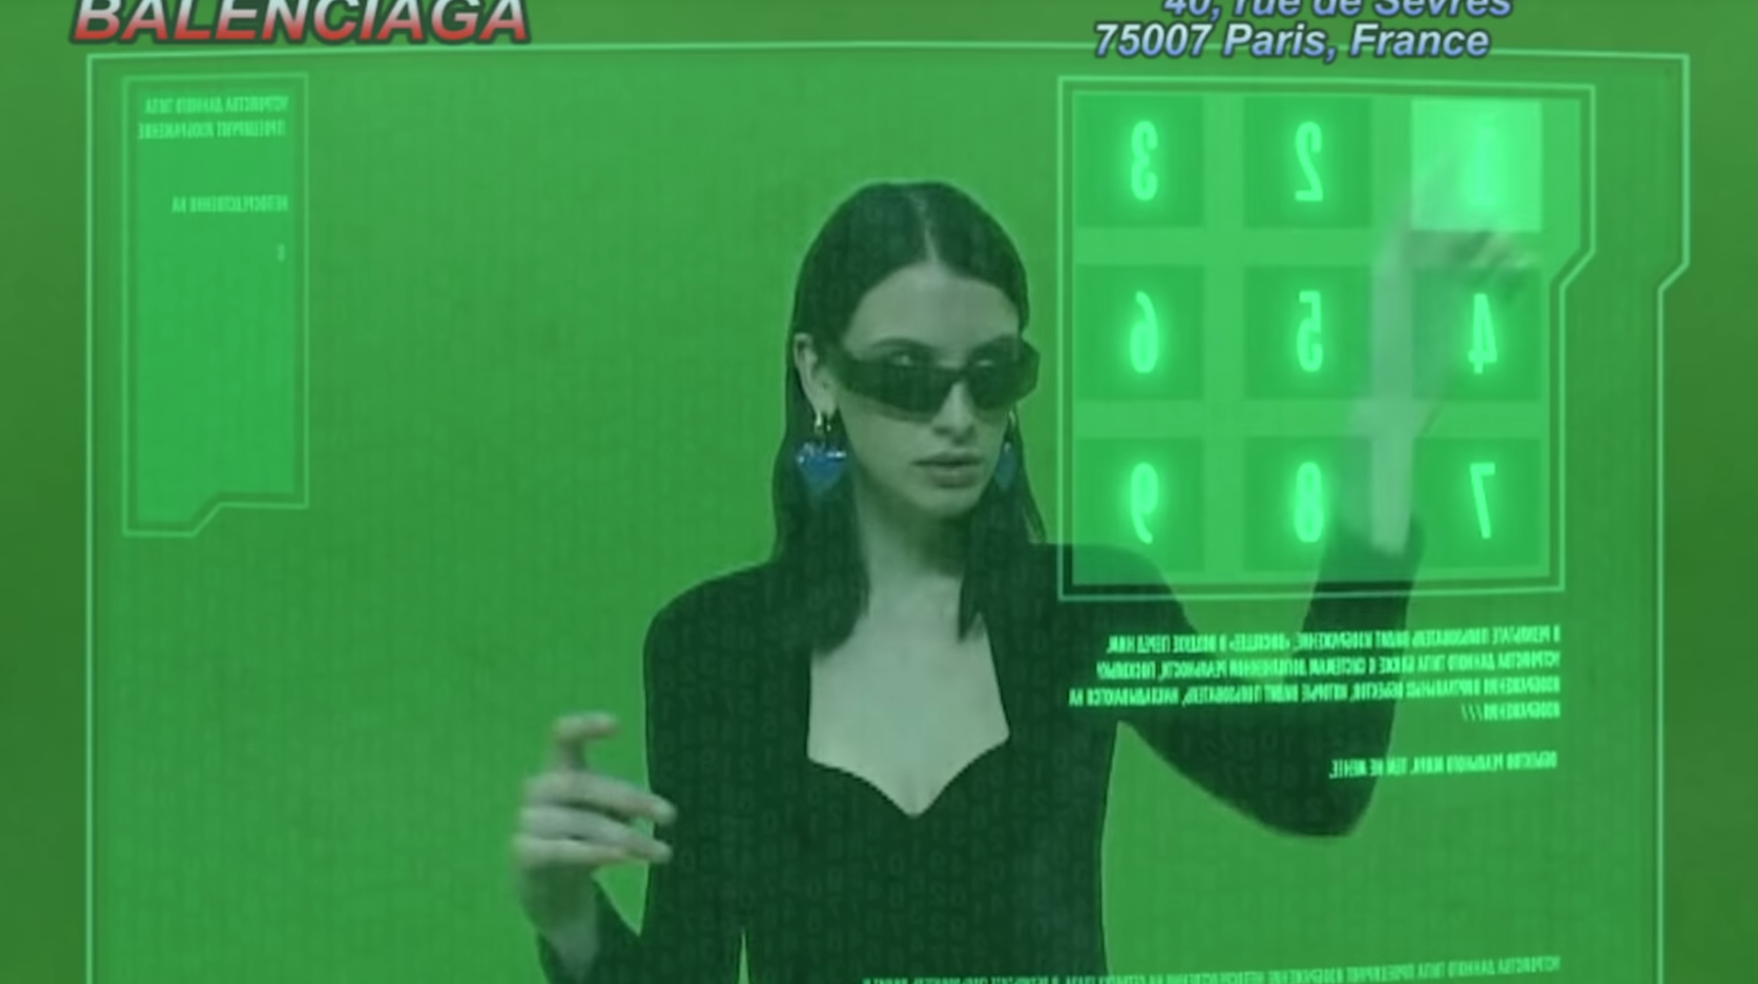 Balenciaga’s Matrix Themed 2019 Campaign has Arrived